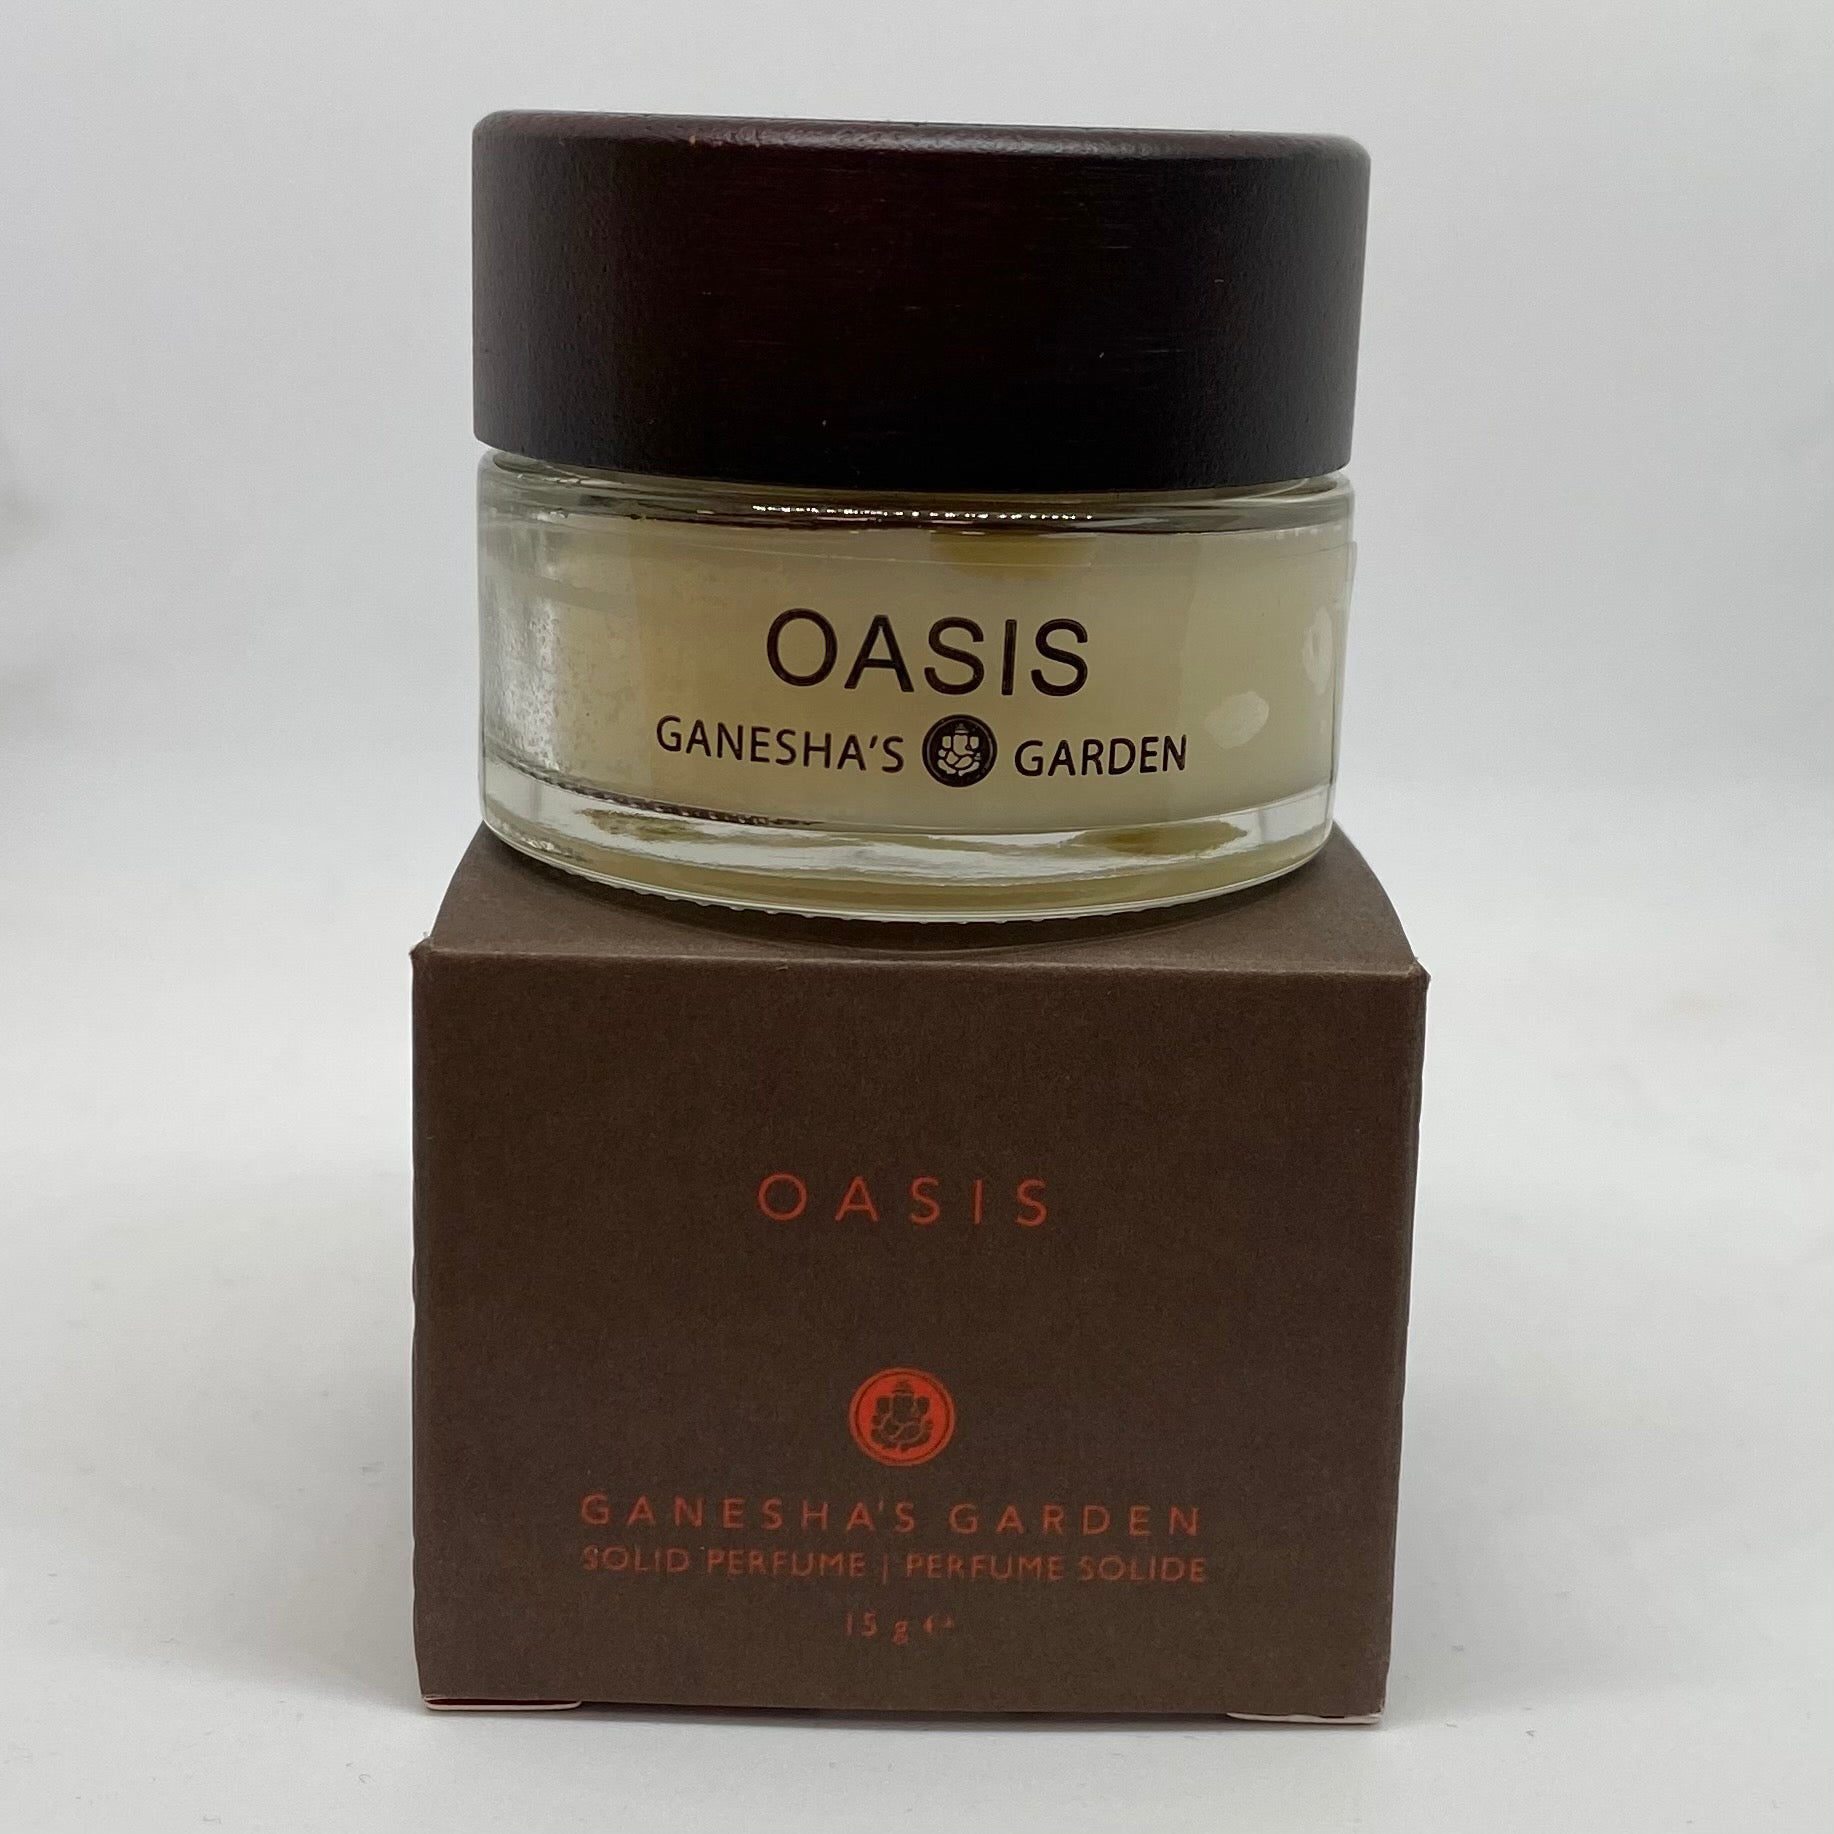 Ganesha's Garden - Solid Perfume